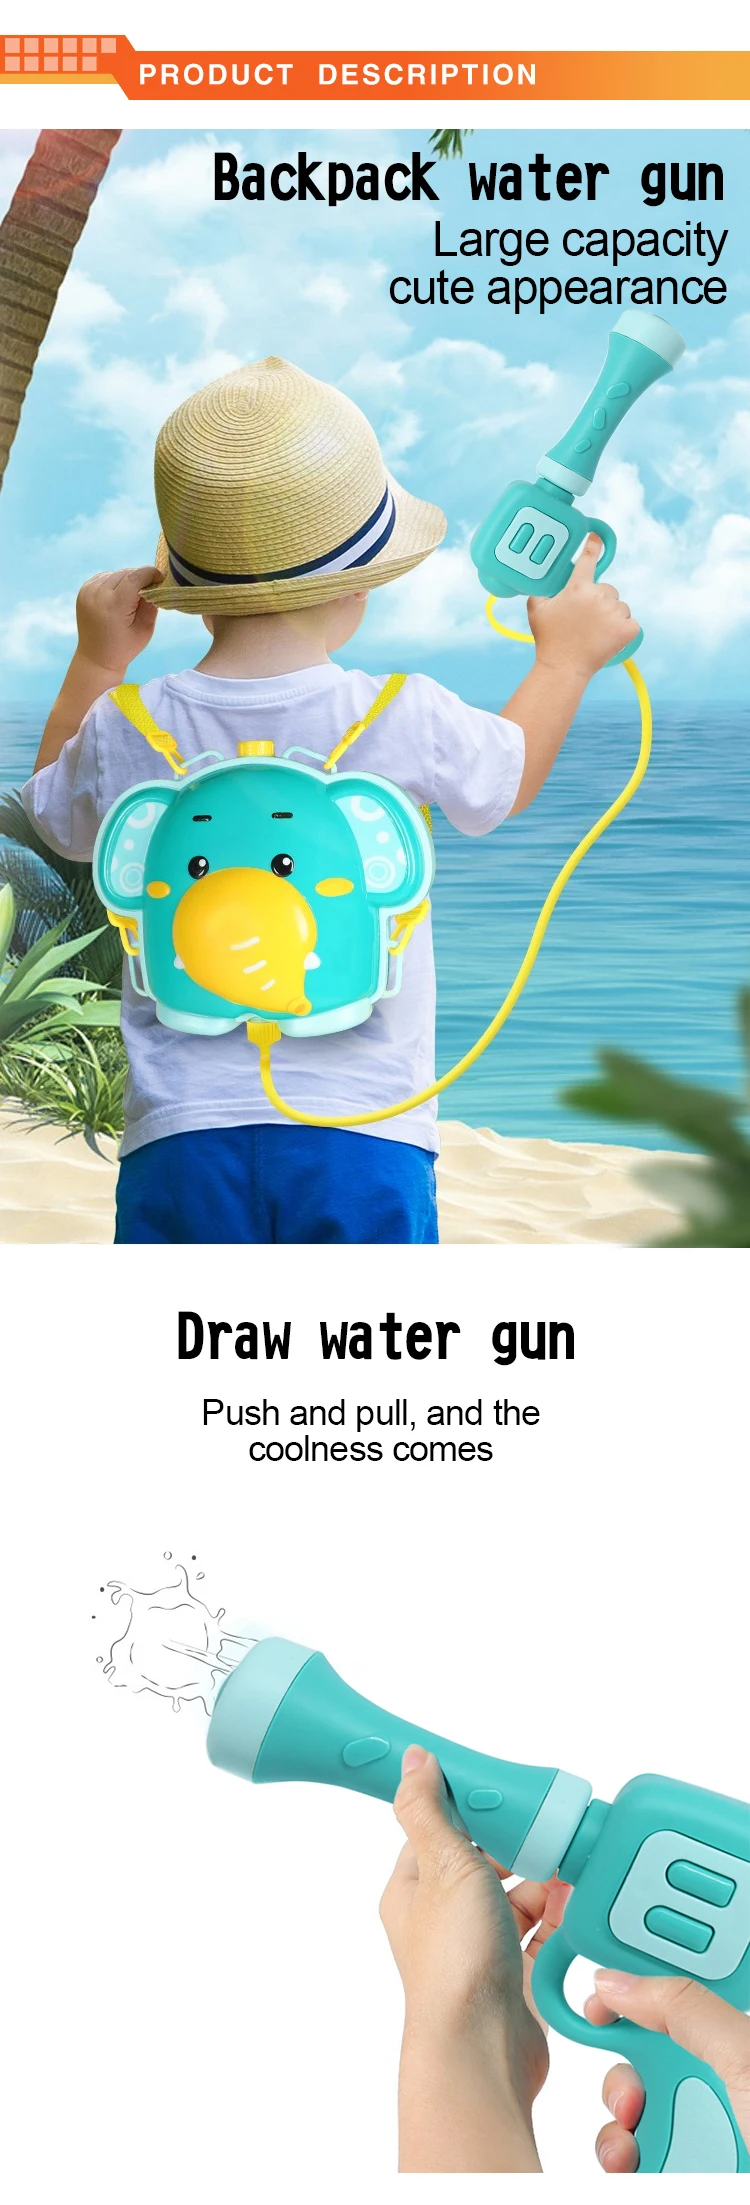 New arrival cartoon backpack water toy gun cute kids water gun